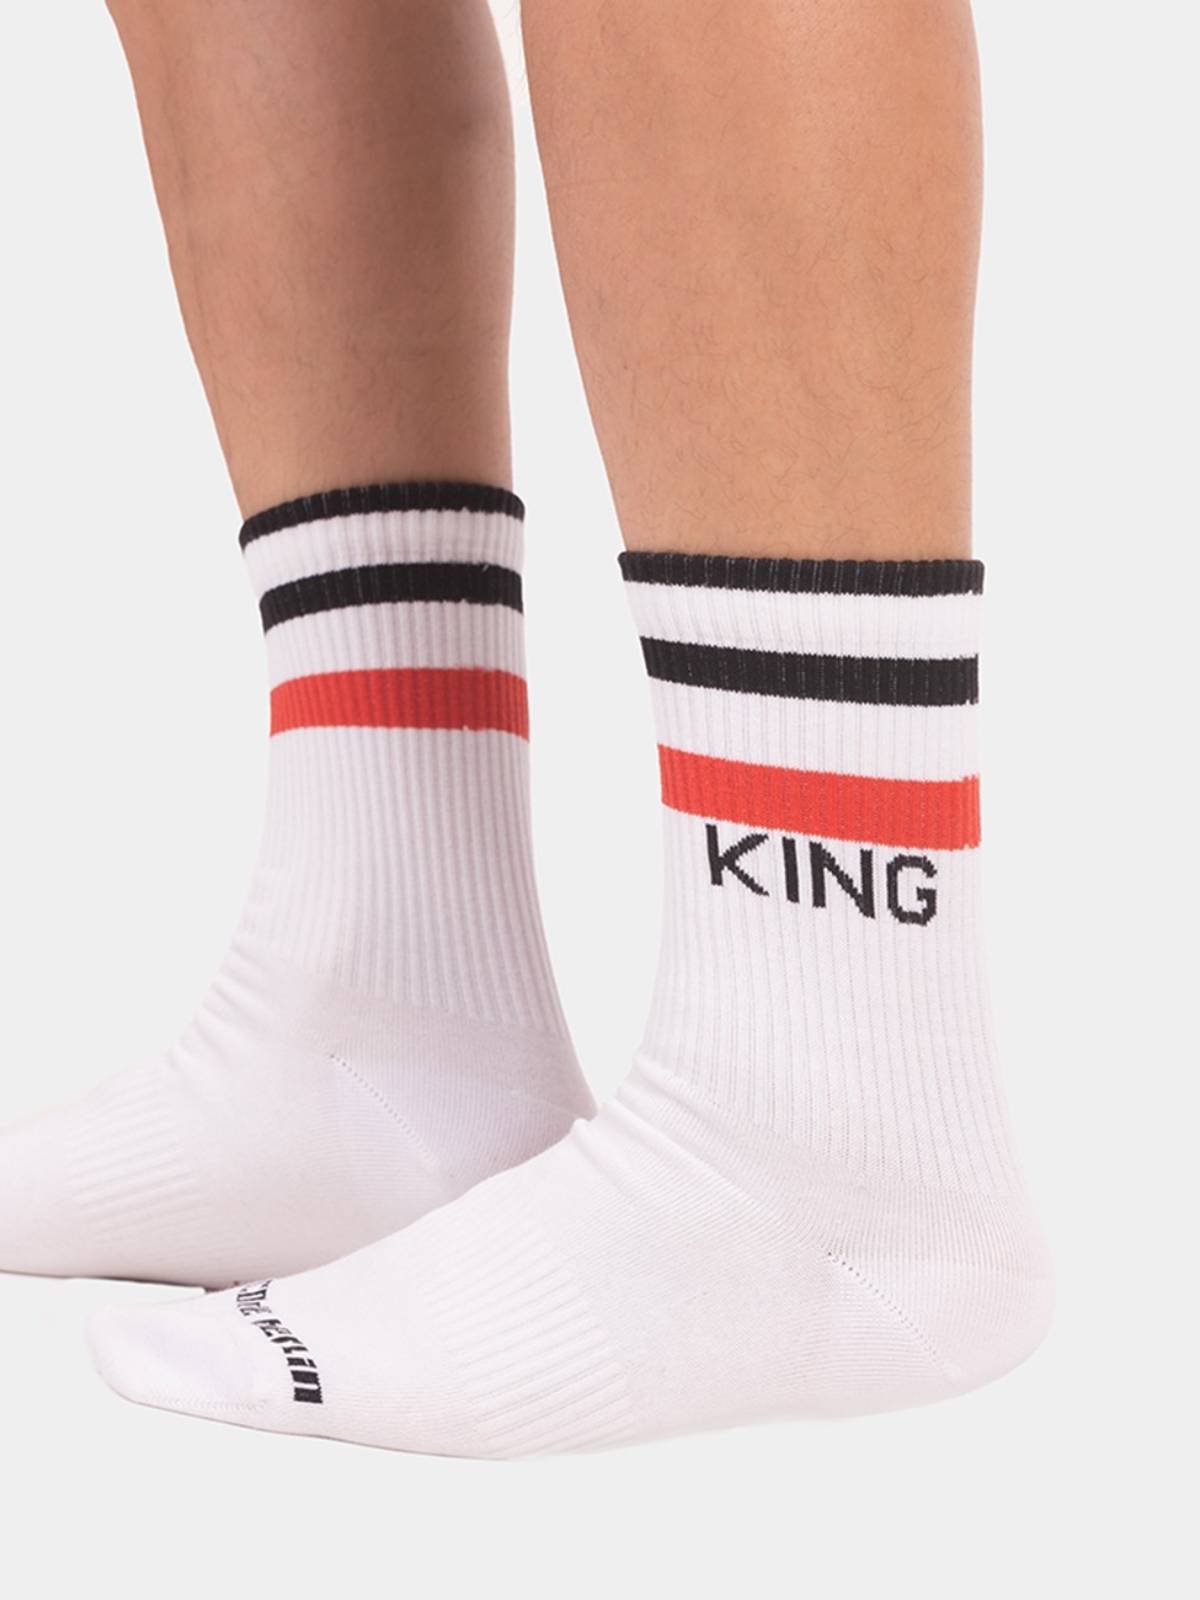 Urban Socks King